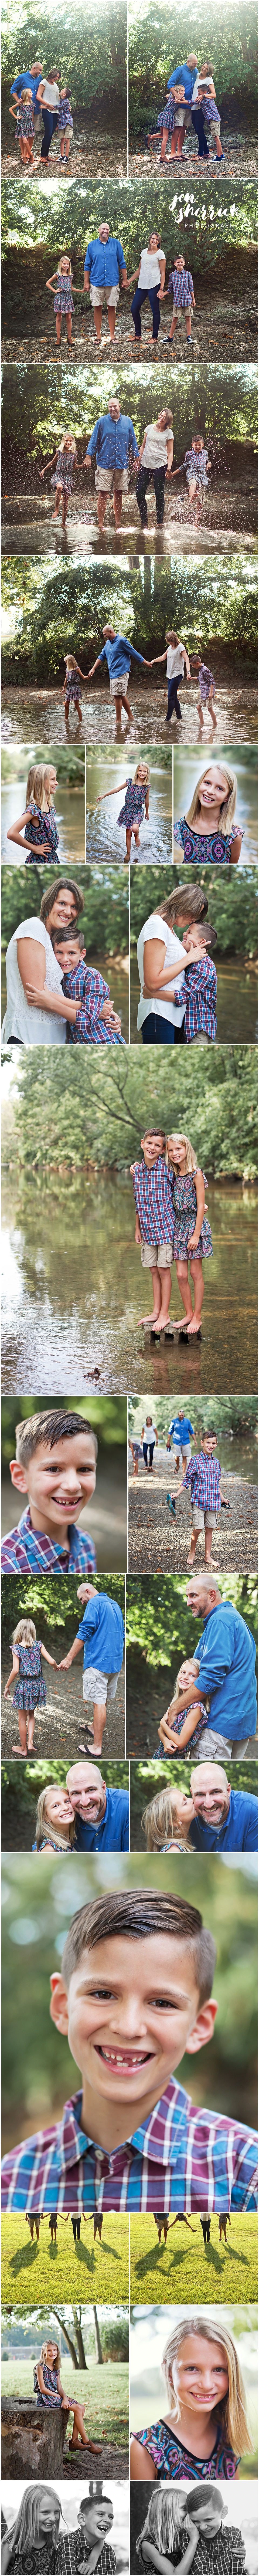 collage of family photos along a creek